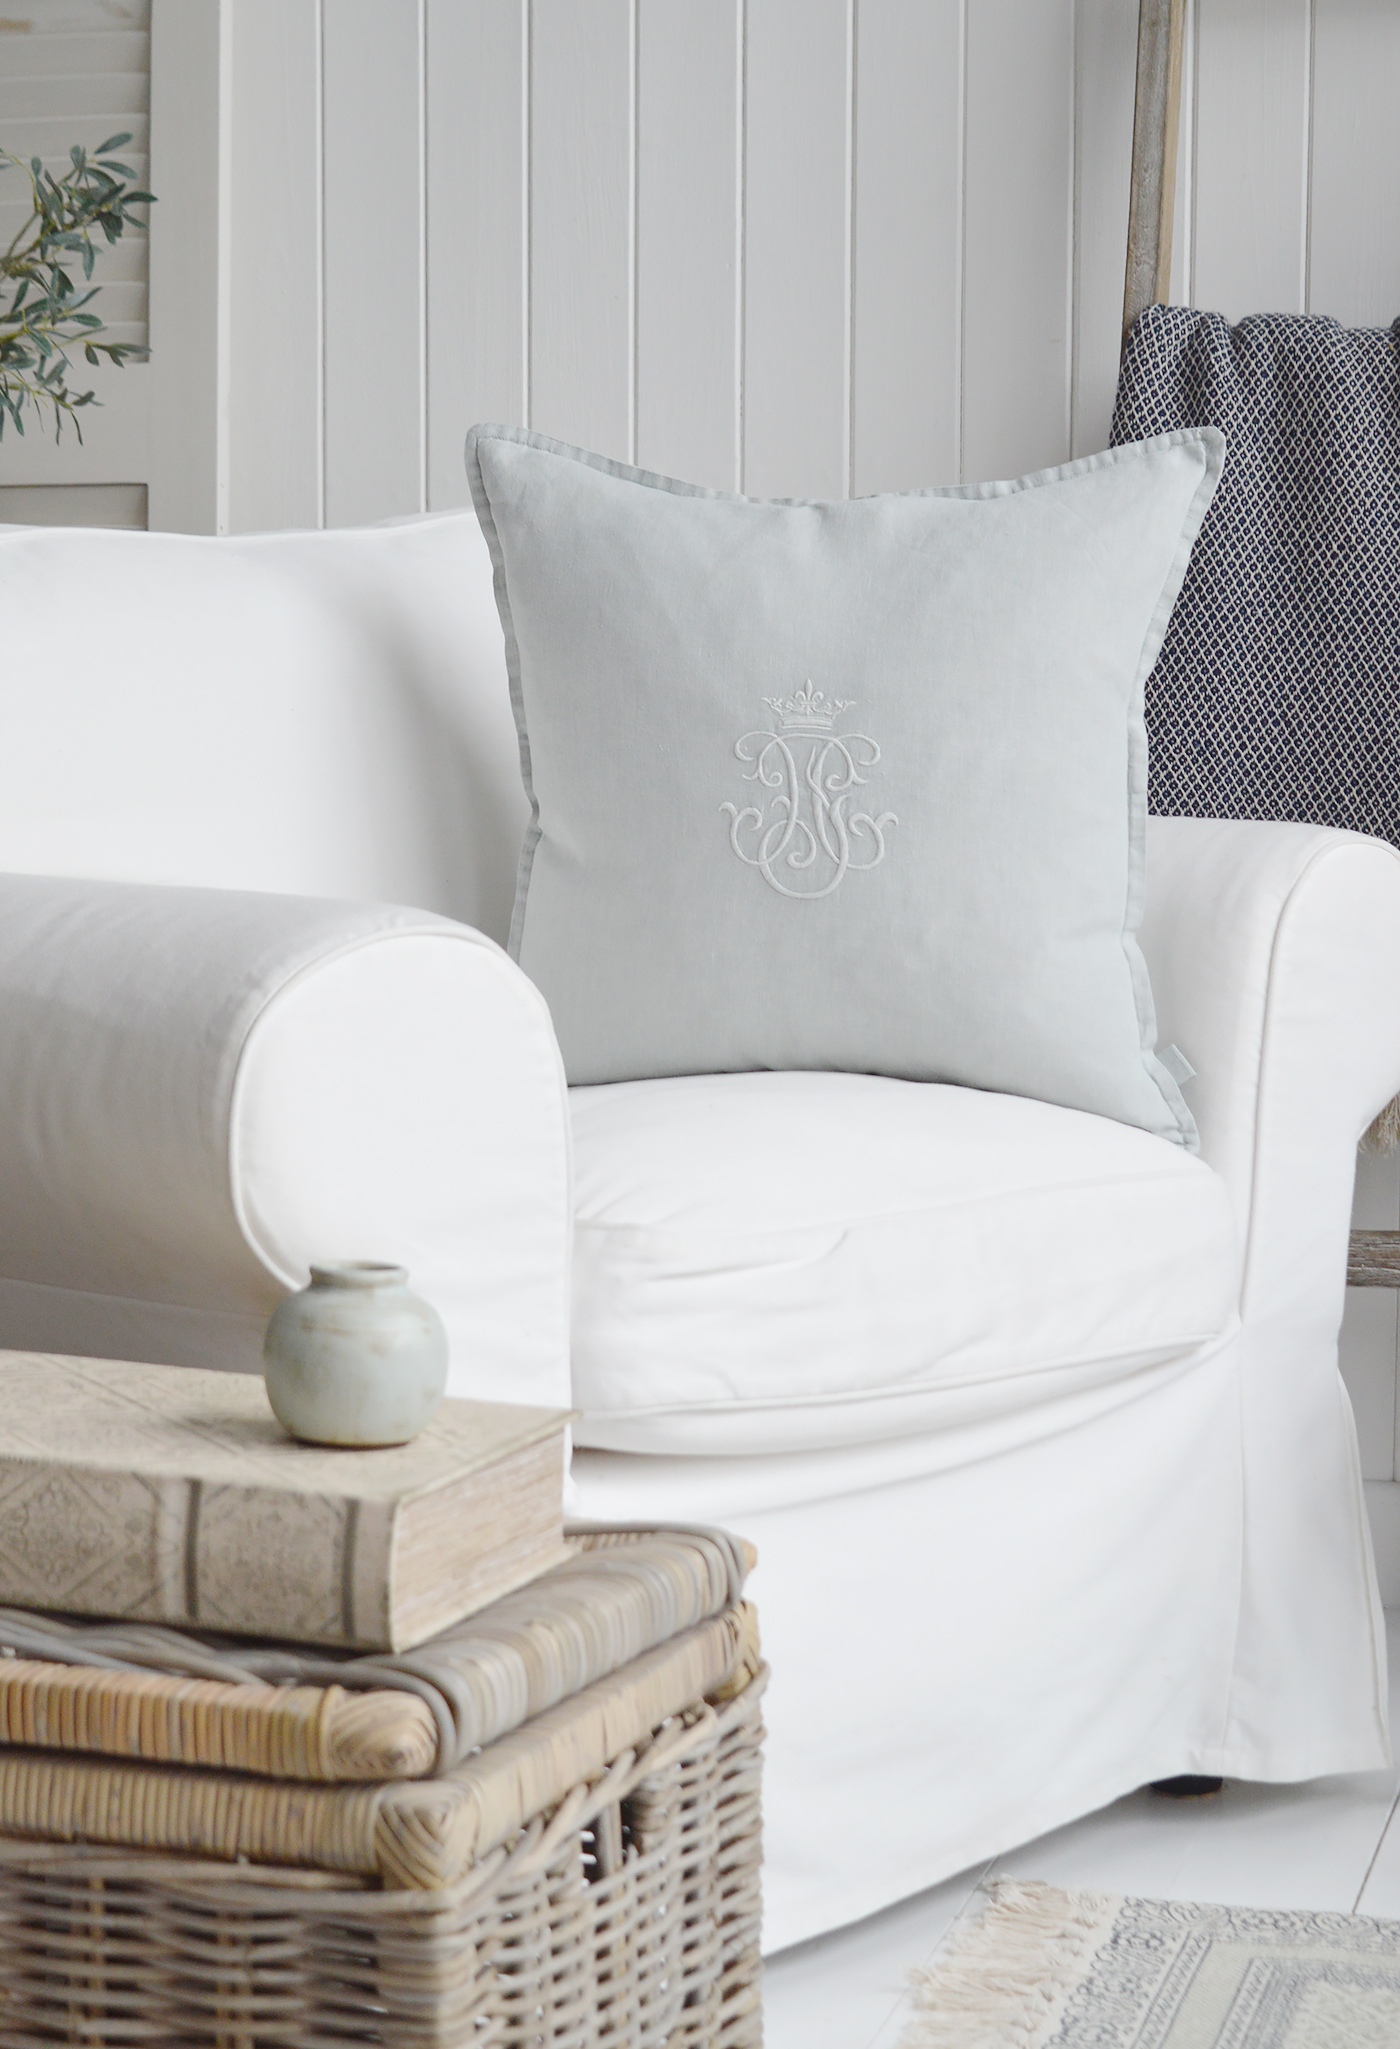 Richmond pale duck egg linen cushion - luxuriouse coastal and new england style cushions